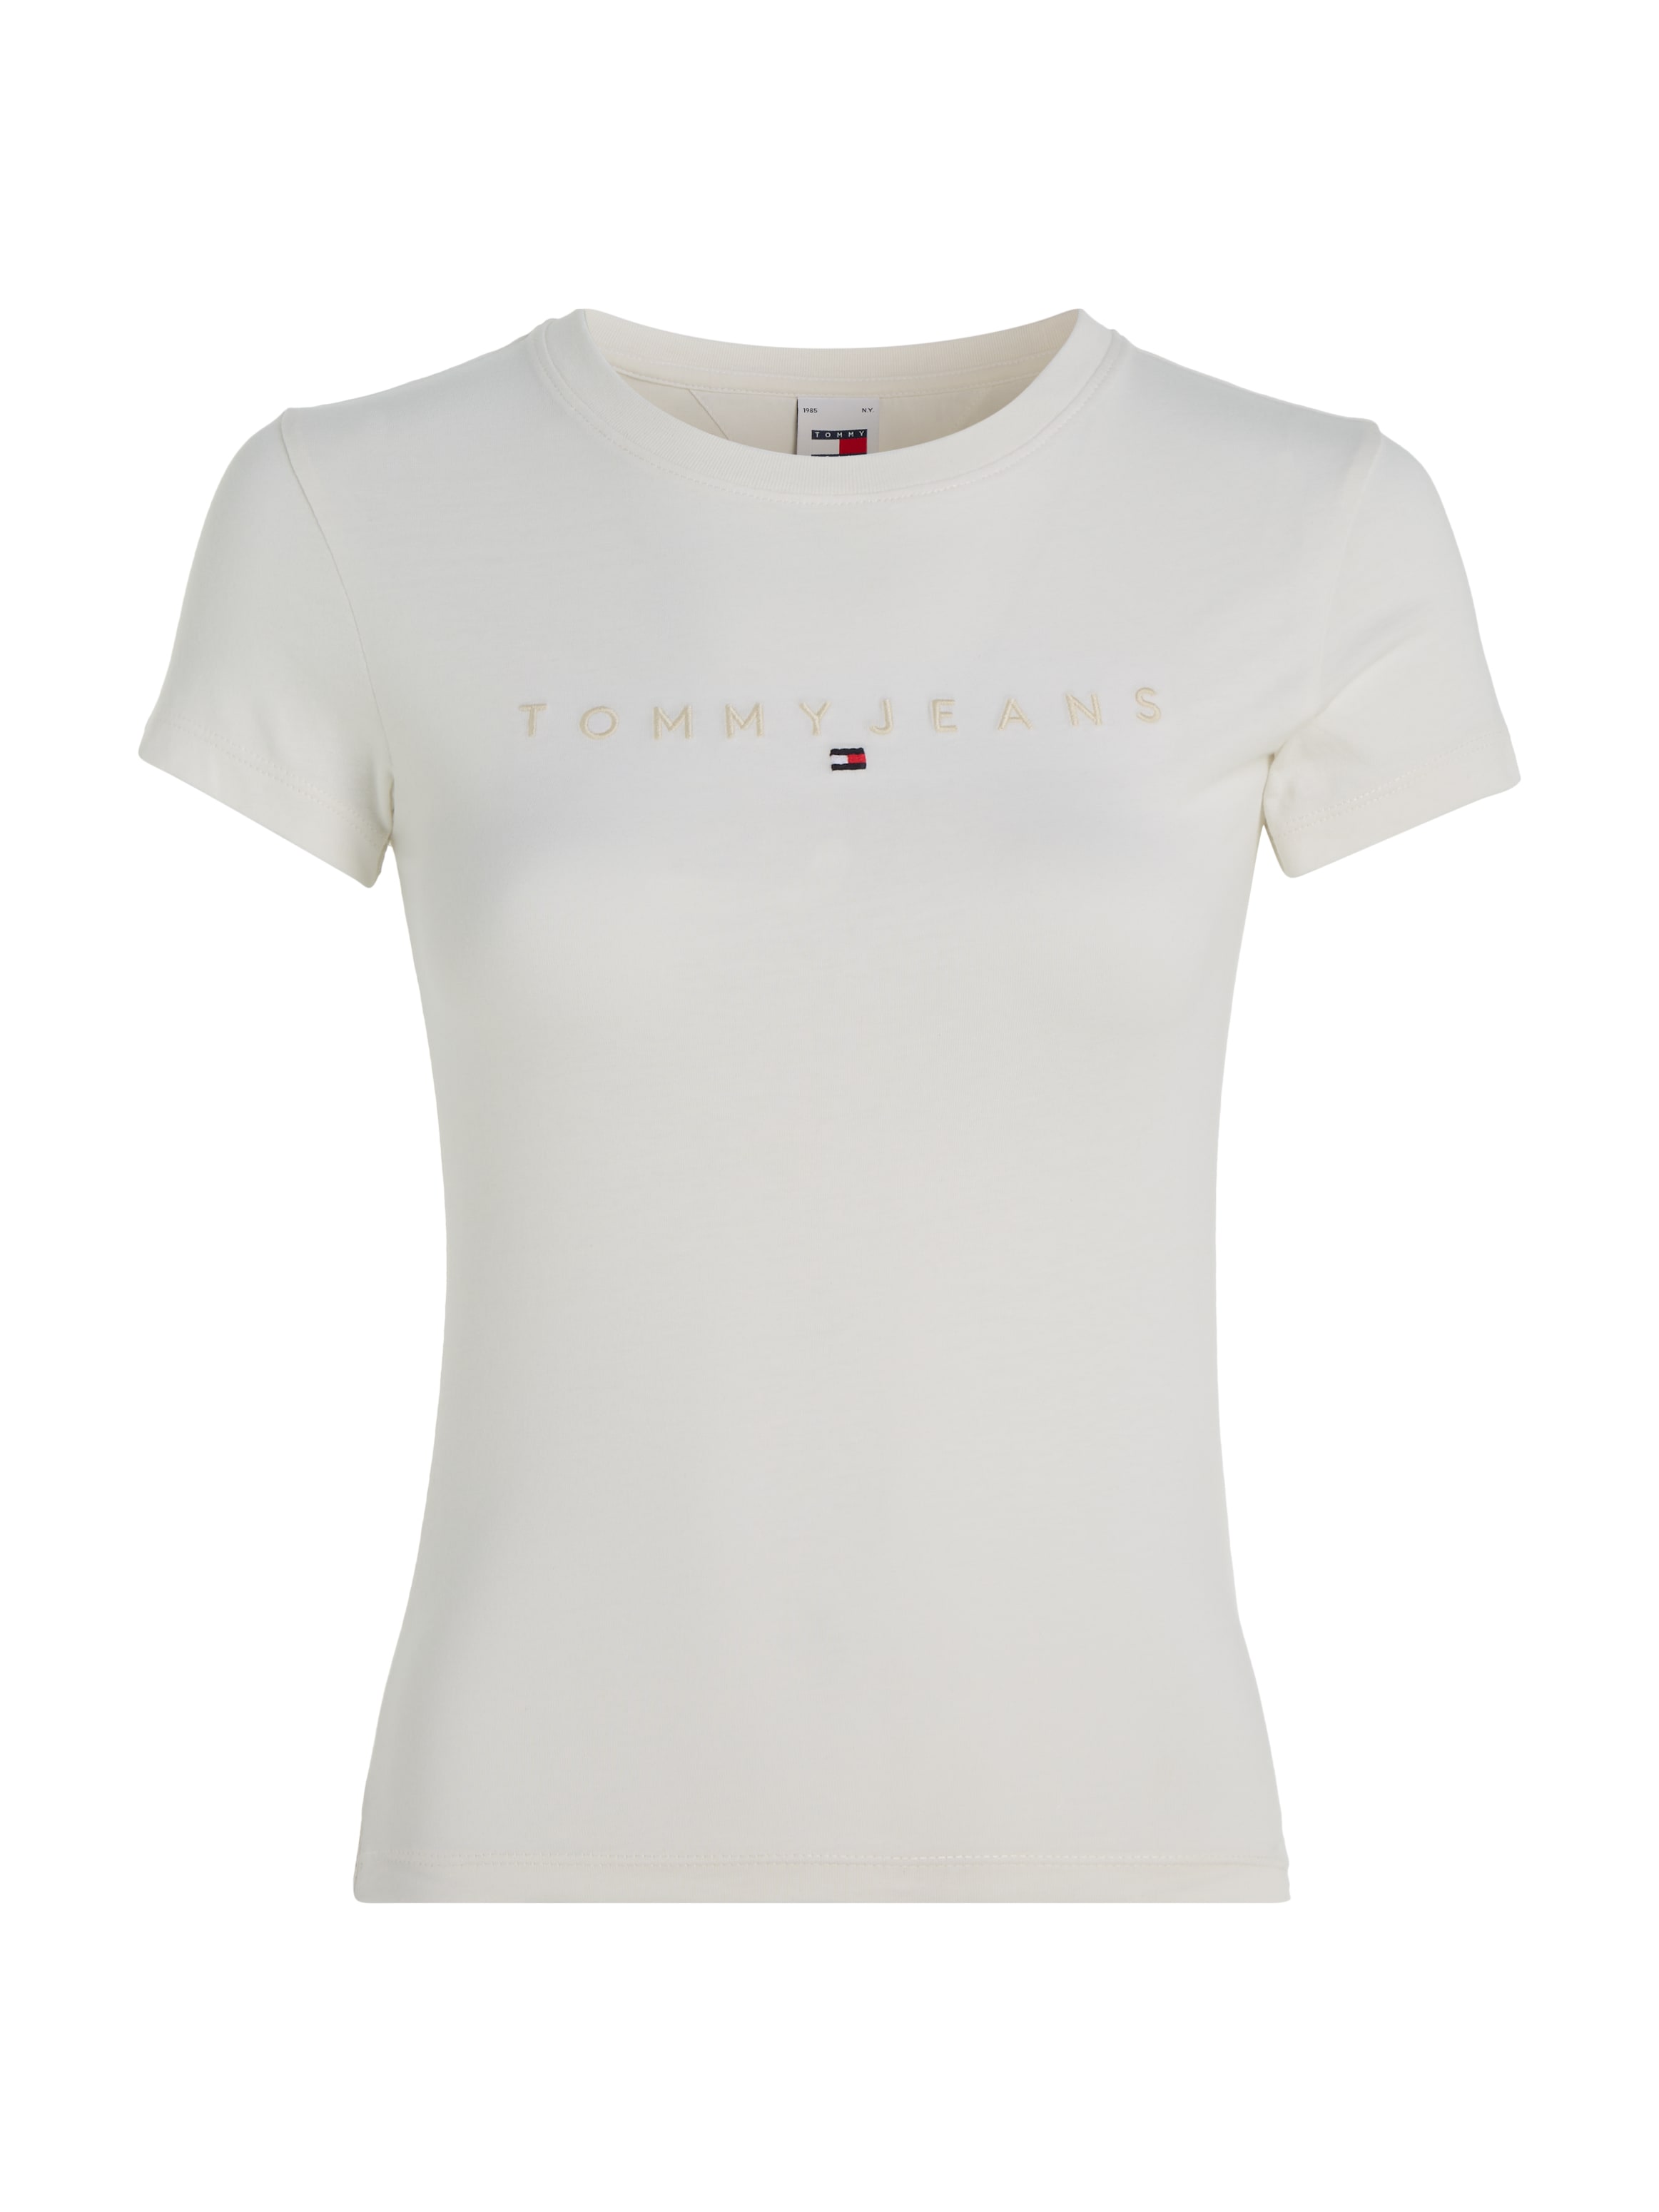 Tommy Jeans Rundhalsshirt »TJW SLIM TONAL LINEAR TEE«, mit gesticktem Tommy Jeans Logo-Schriftzug